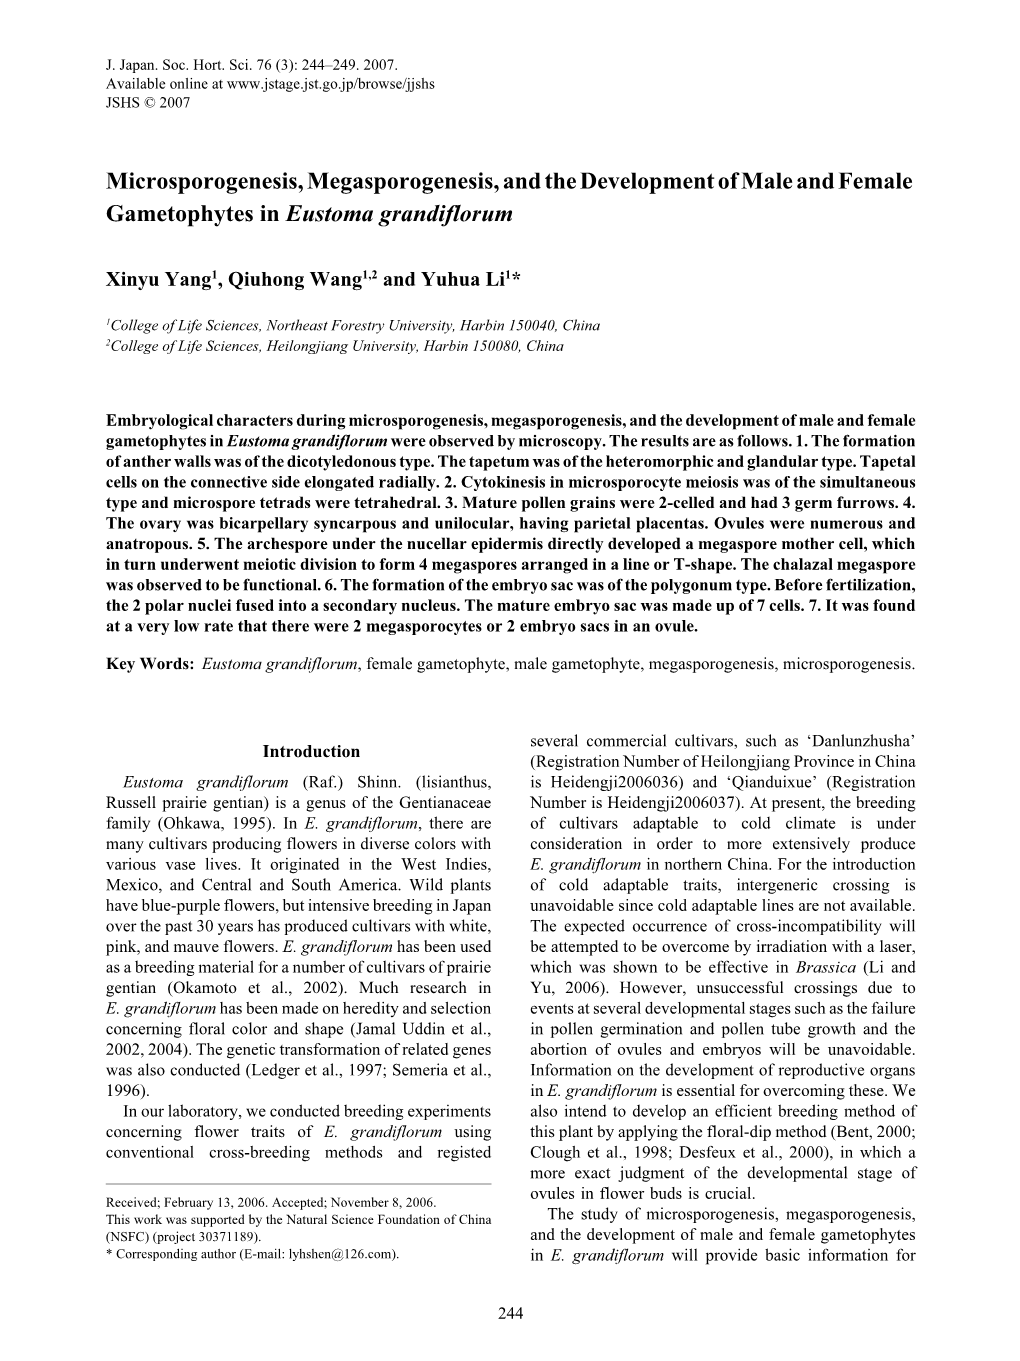 Microsporogenesis, Megasporogenesis, and the Development of Male and Female Gametophytes in Eustoma Grandiflorum